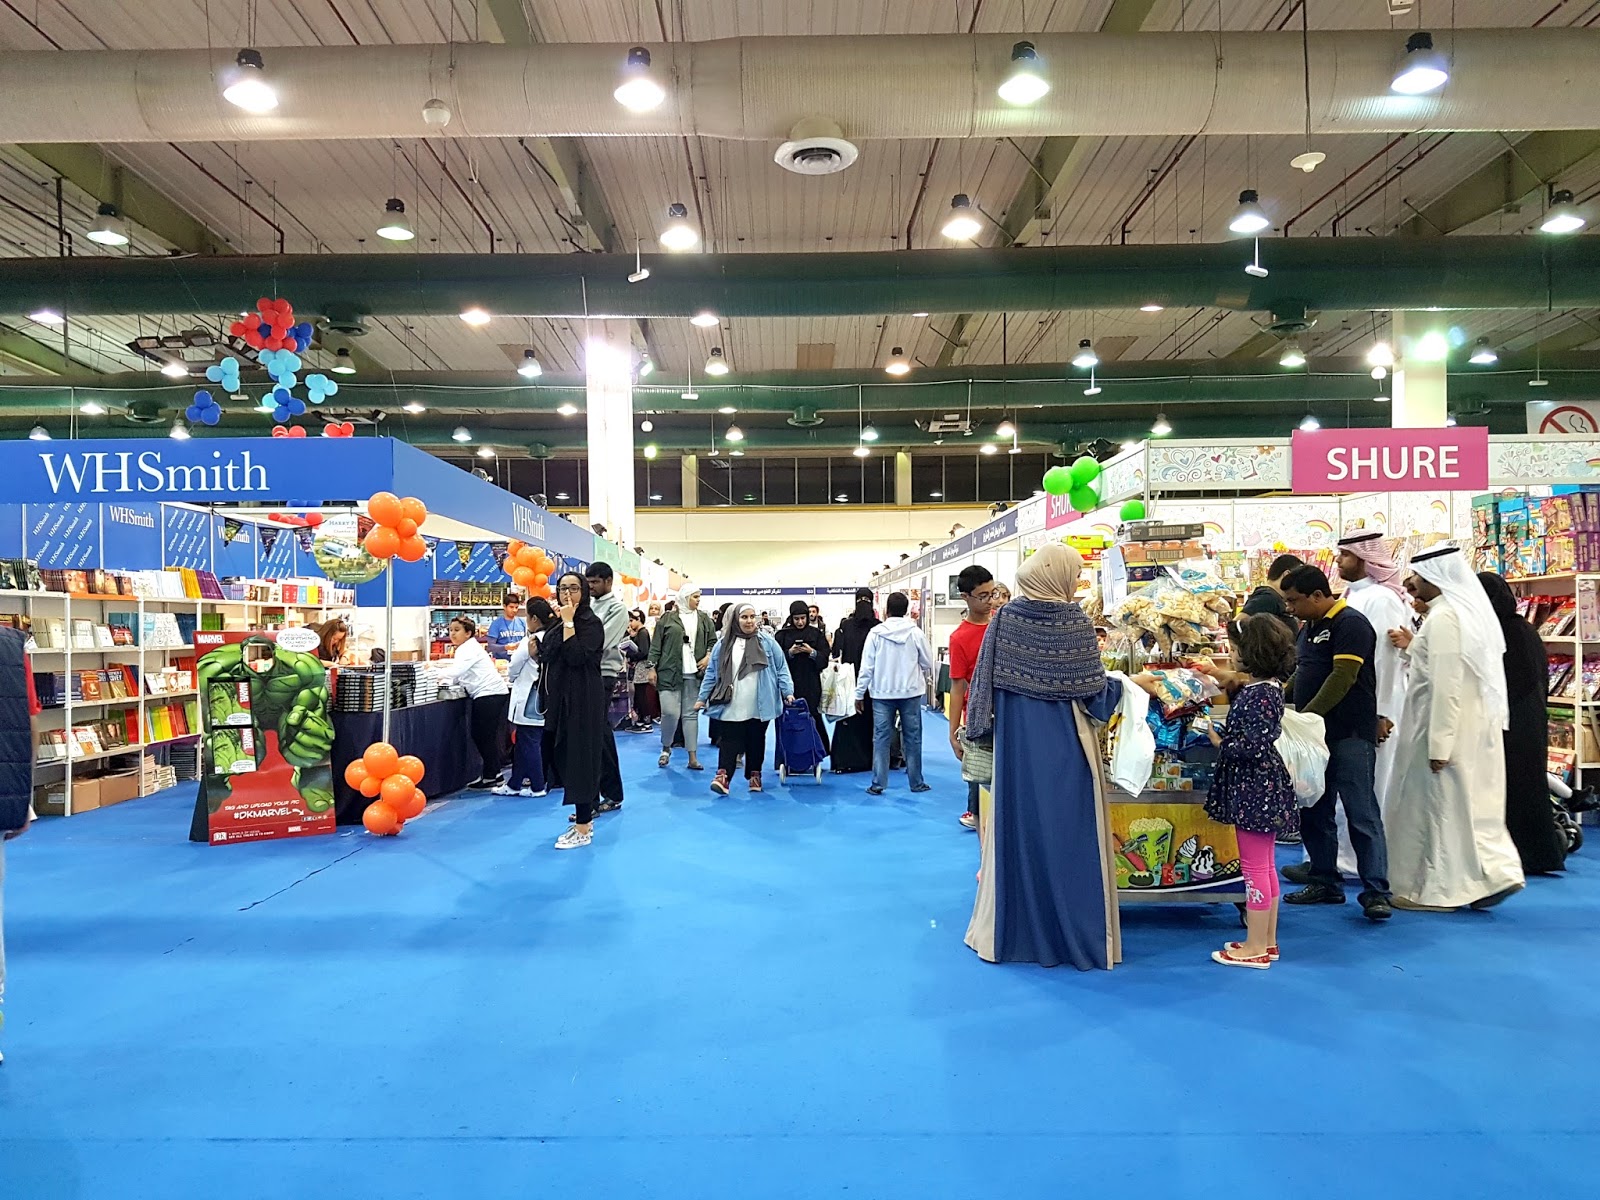 kuwait travel fair